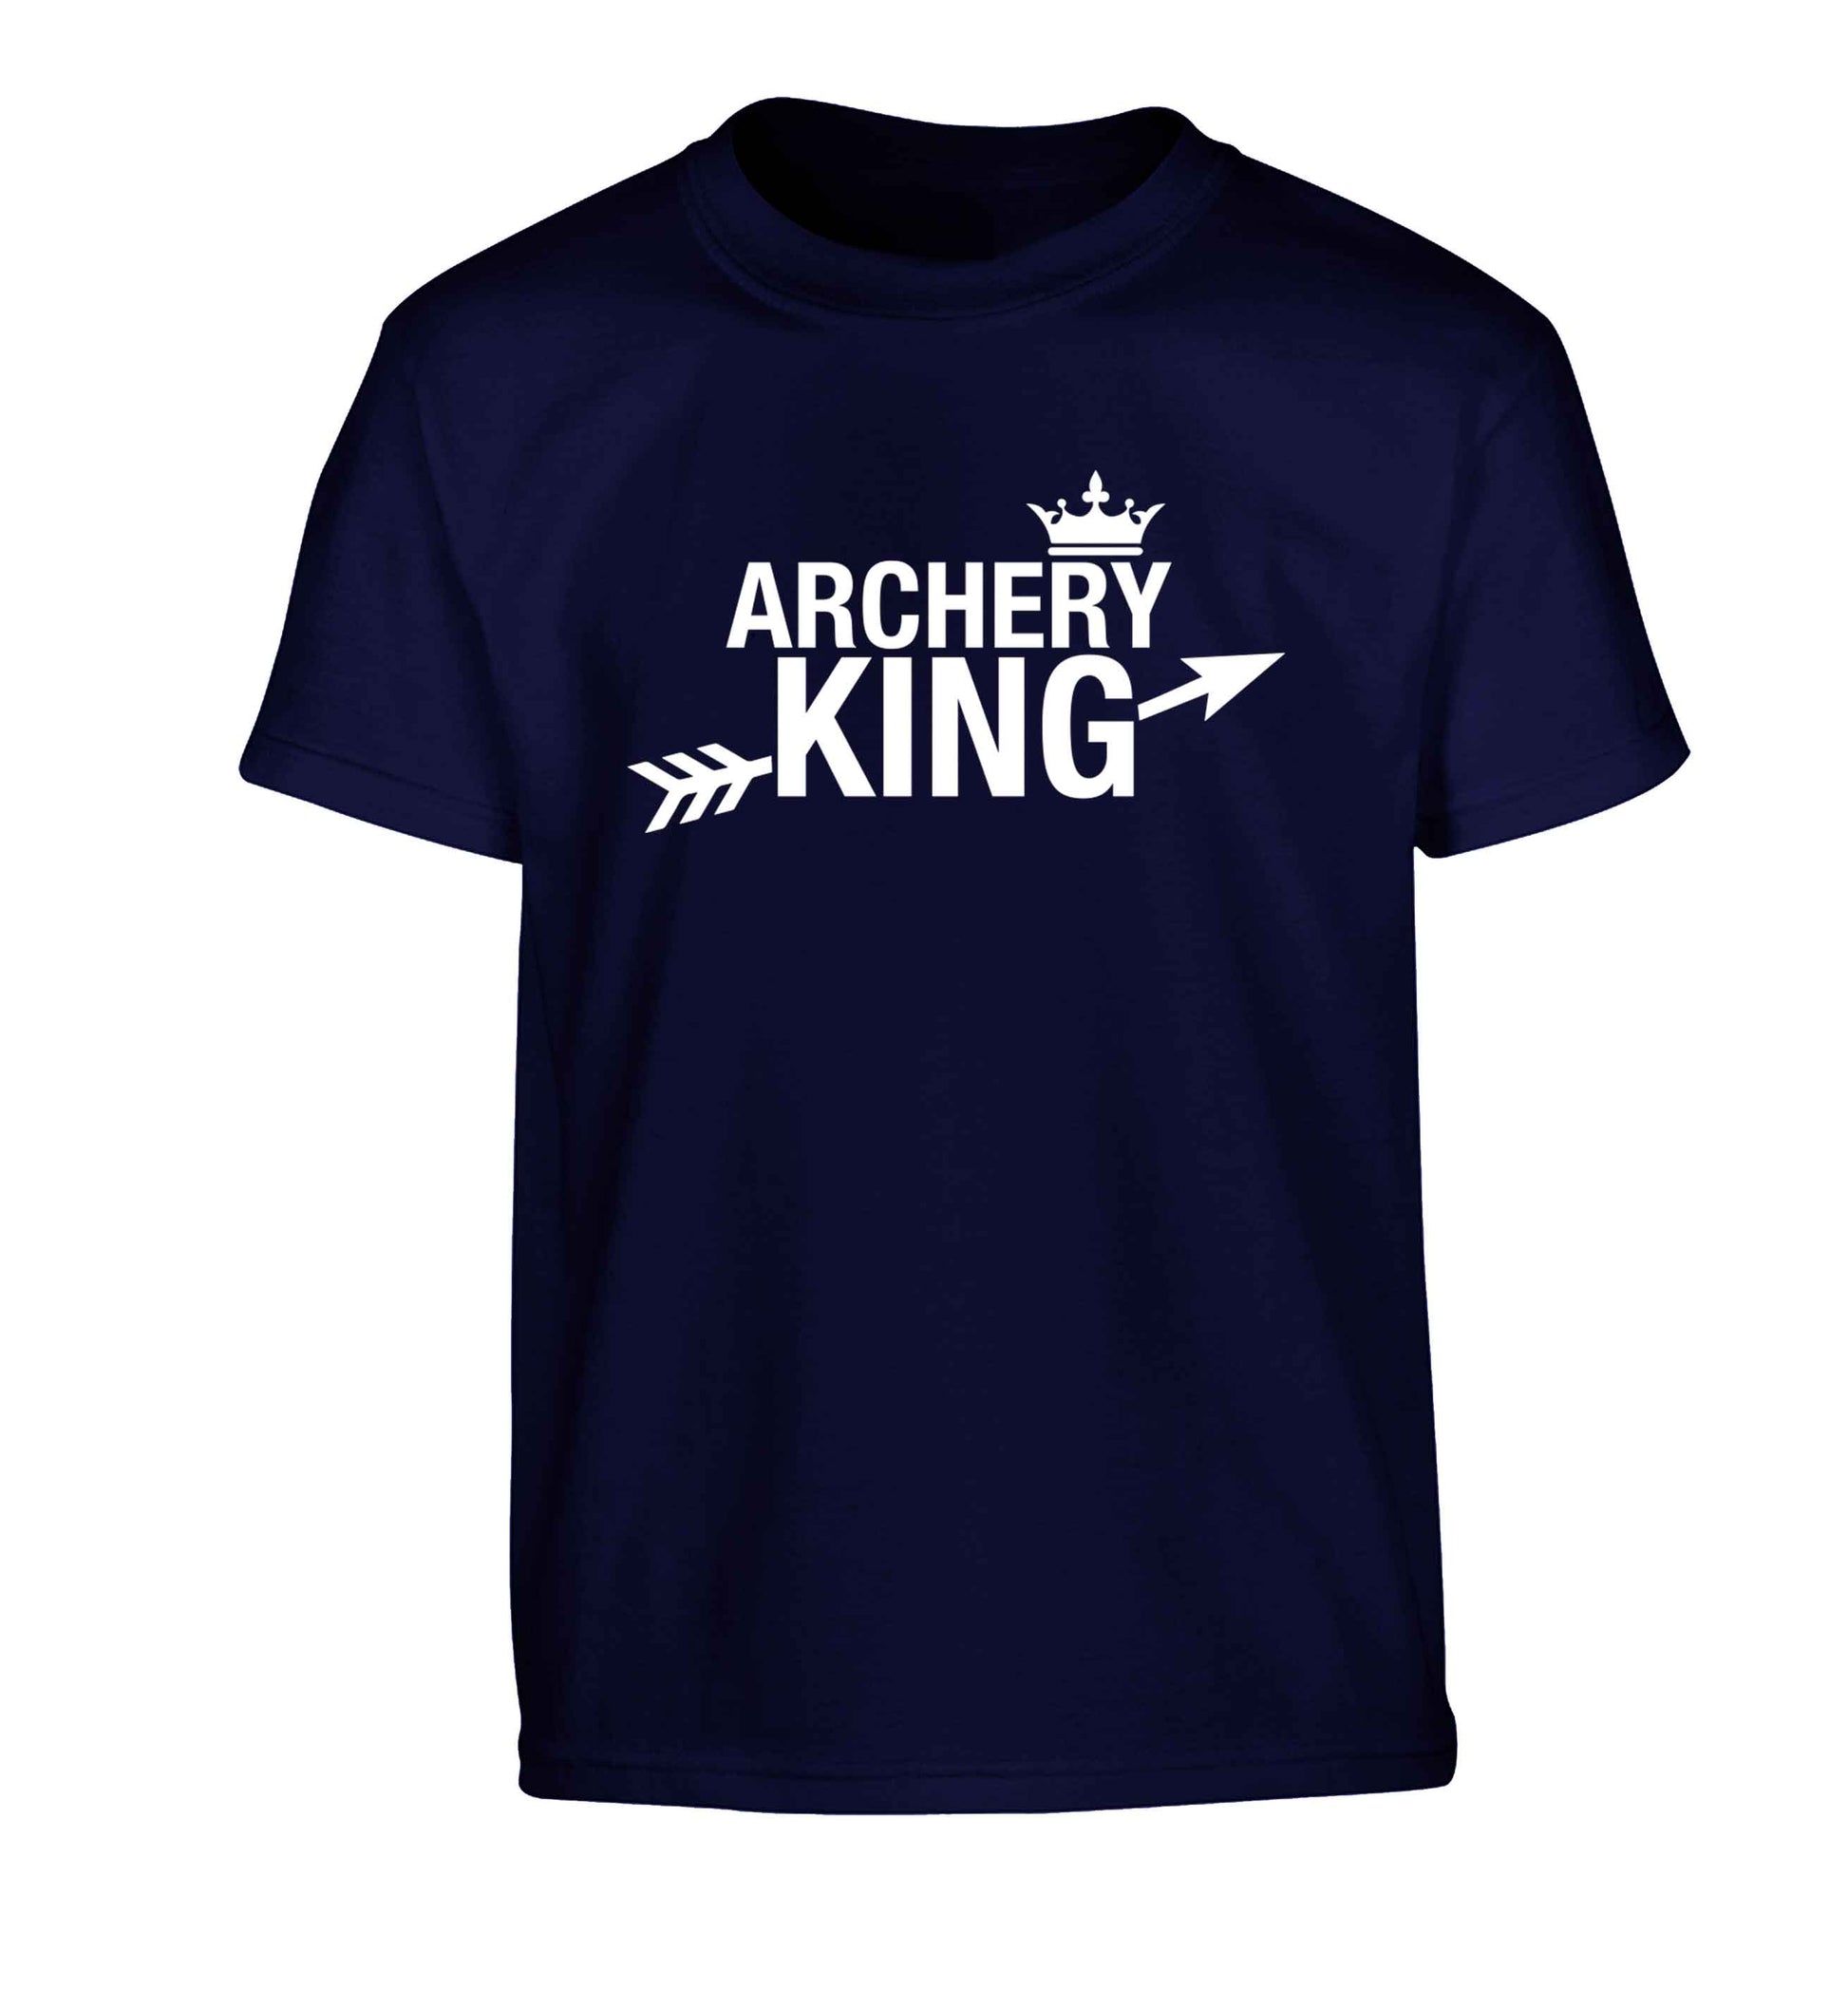 Archery king Children's navy Tshirt 12-13 Years